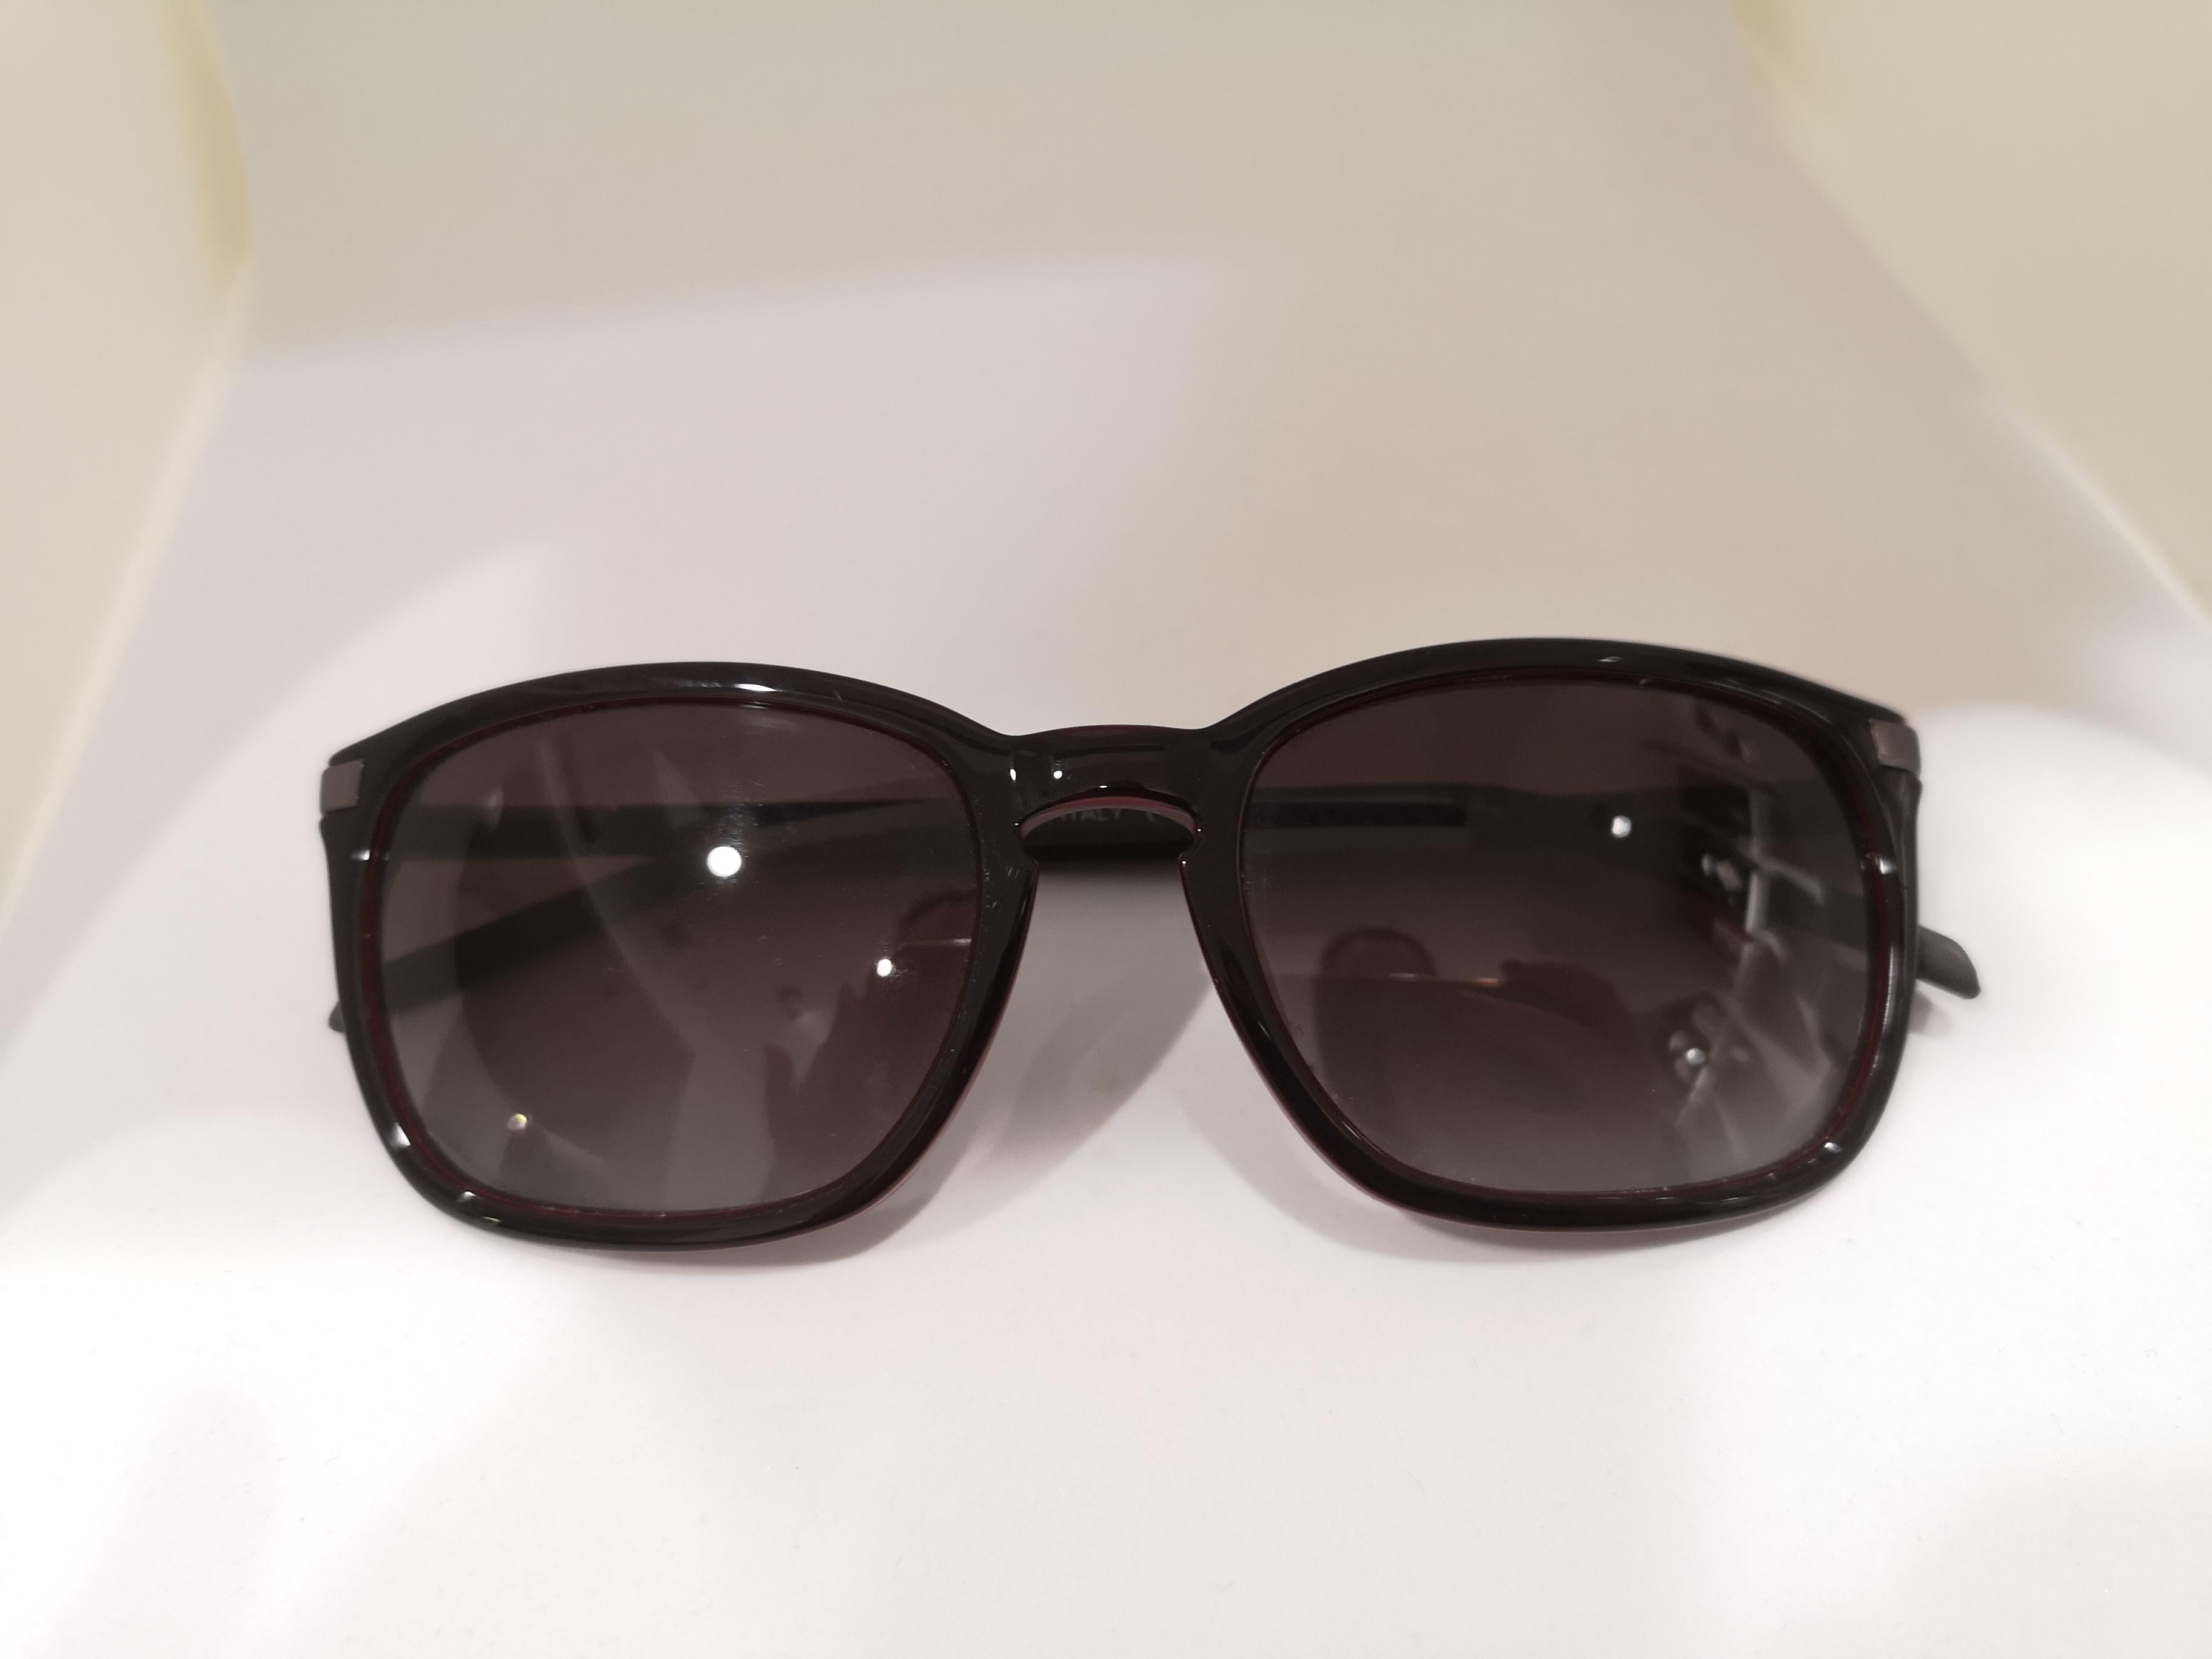 Black Tom Ford vintage sunglasses